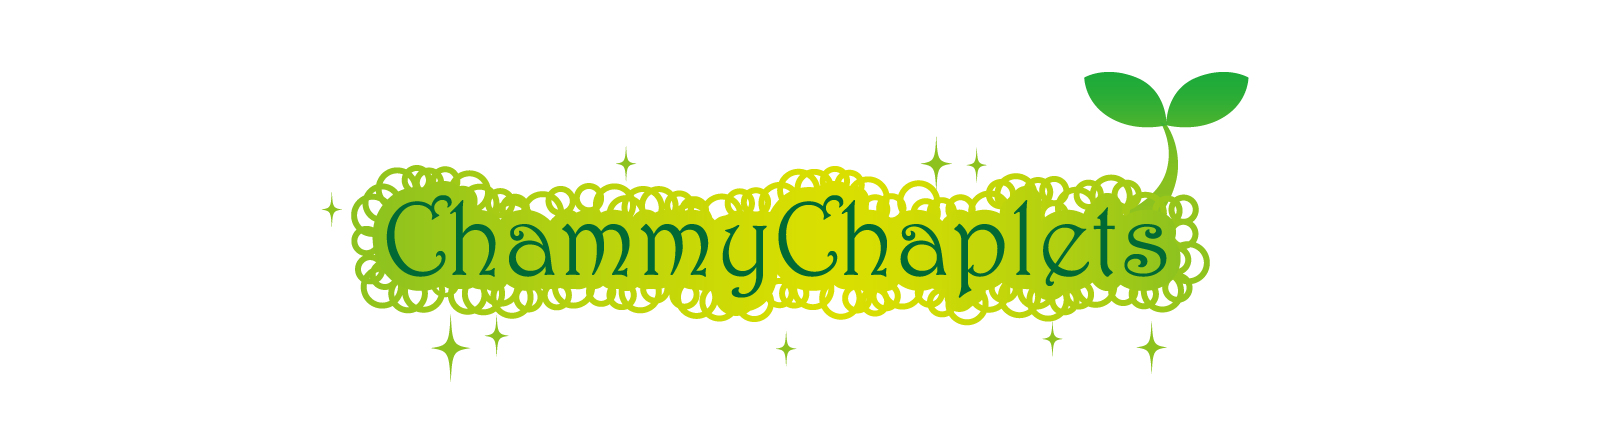 ChammyChaplets.png